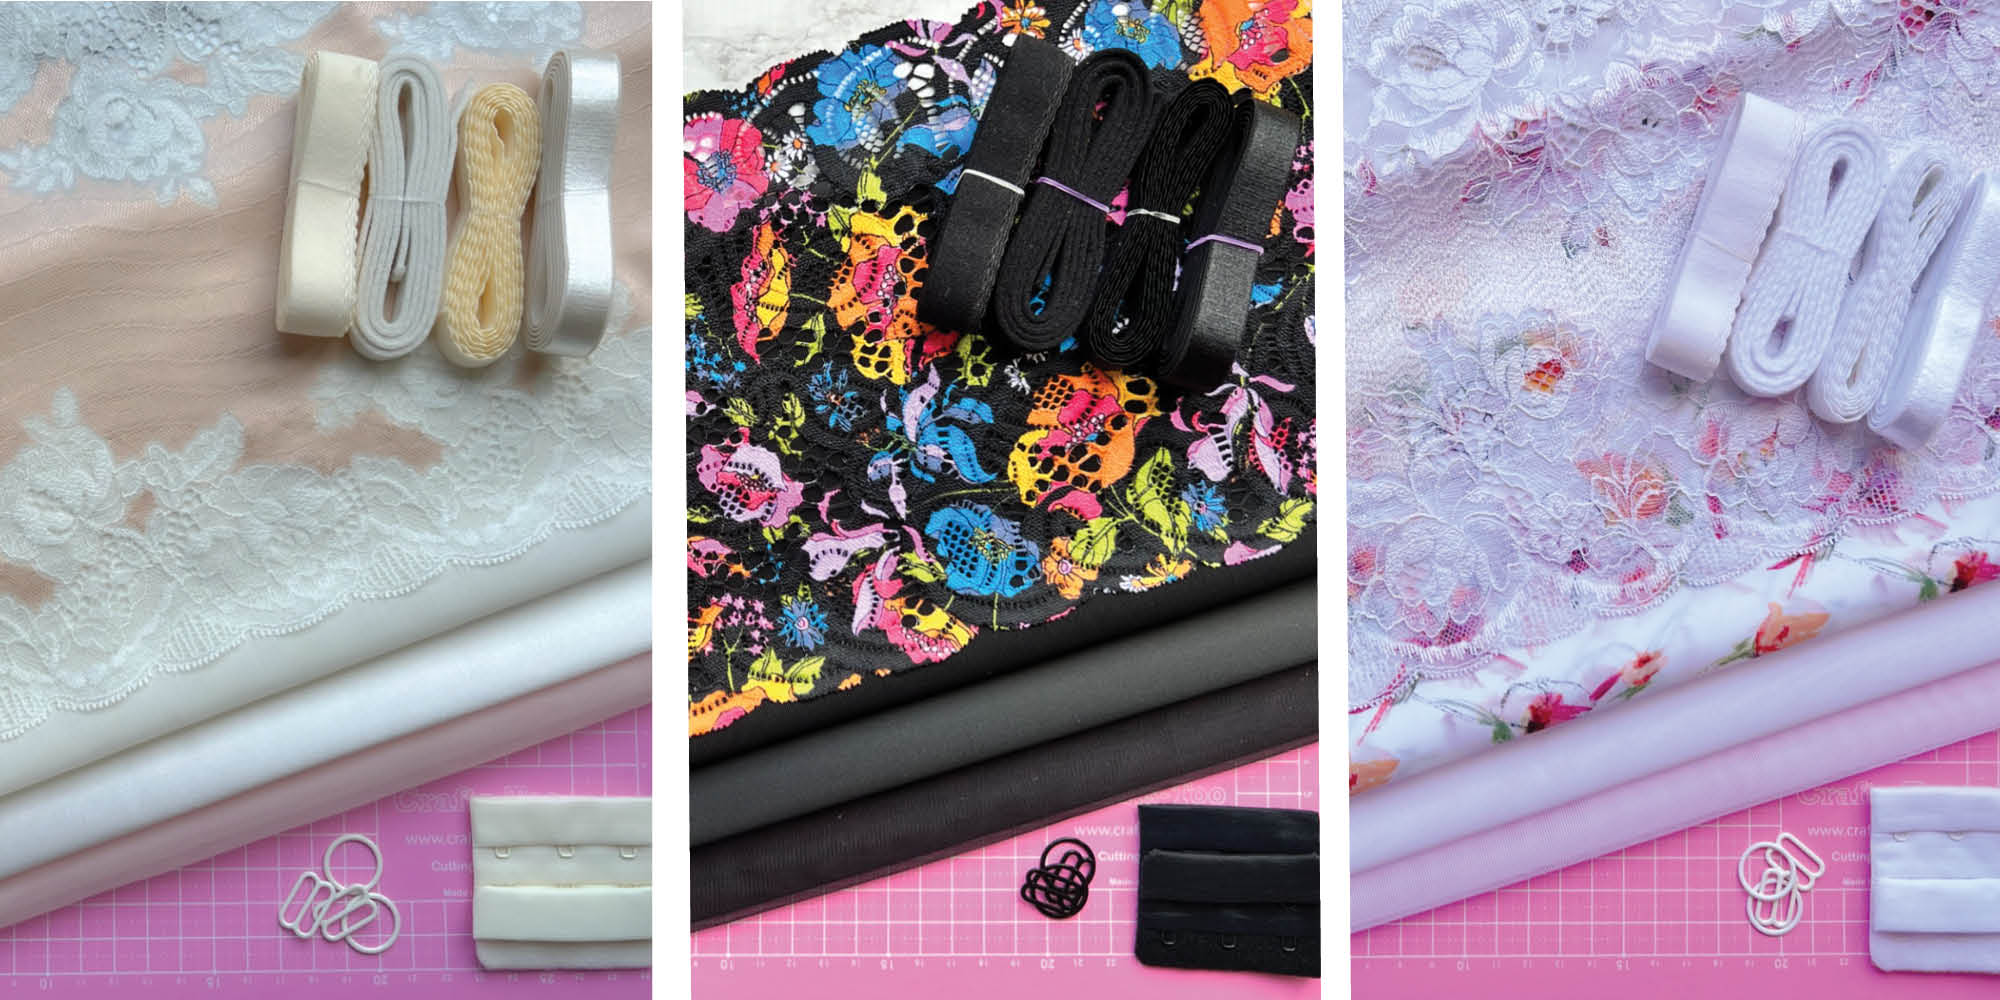 Pink & Black Flower Bra Making Fabric and 7 Lace Kit - Porcelynne Lingerie  Supplies